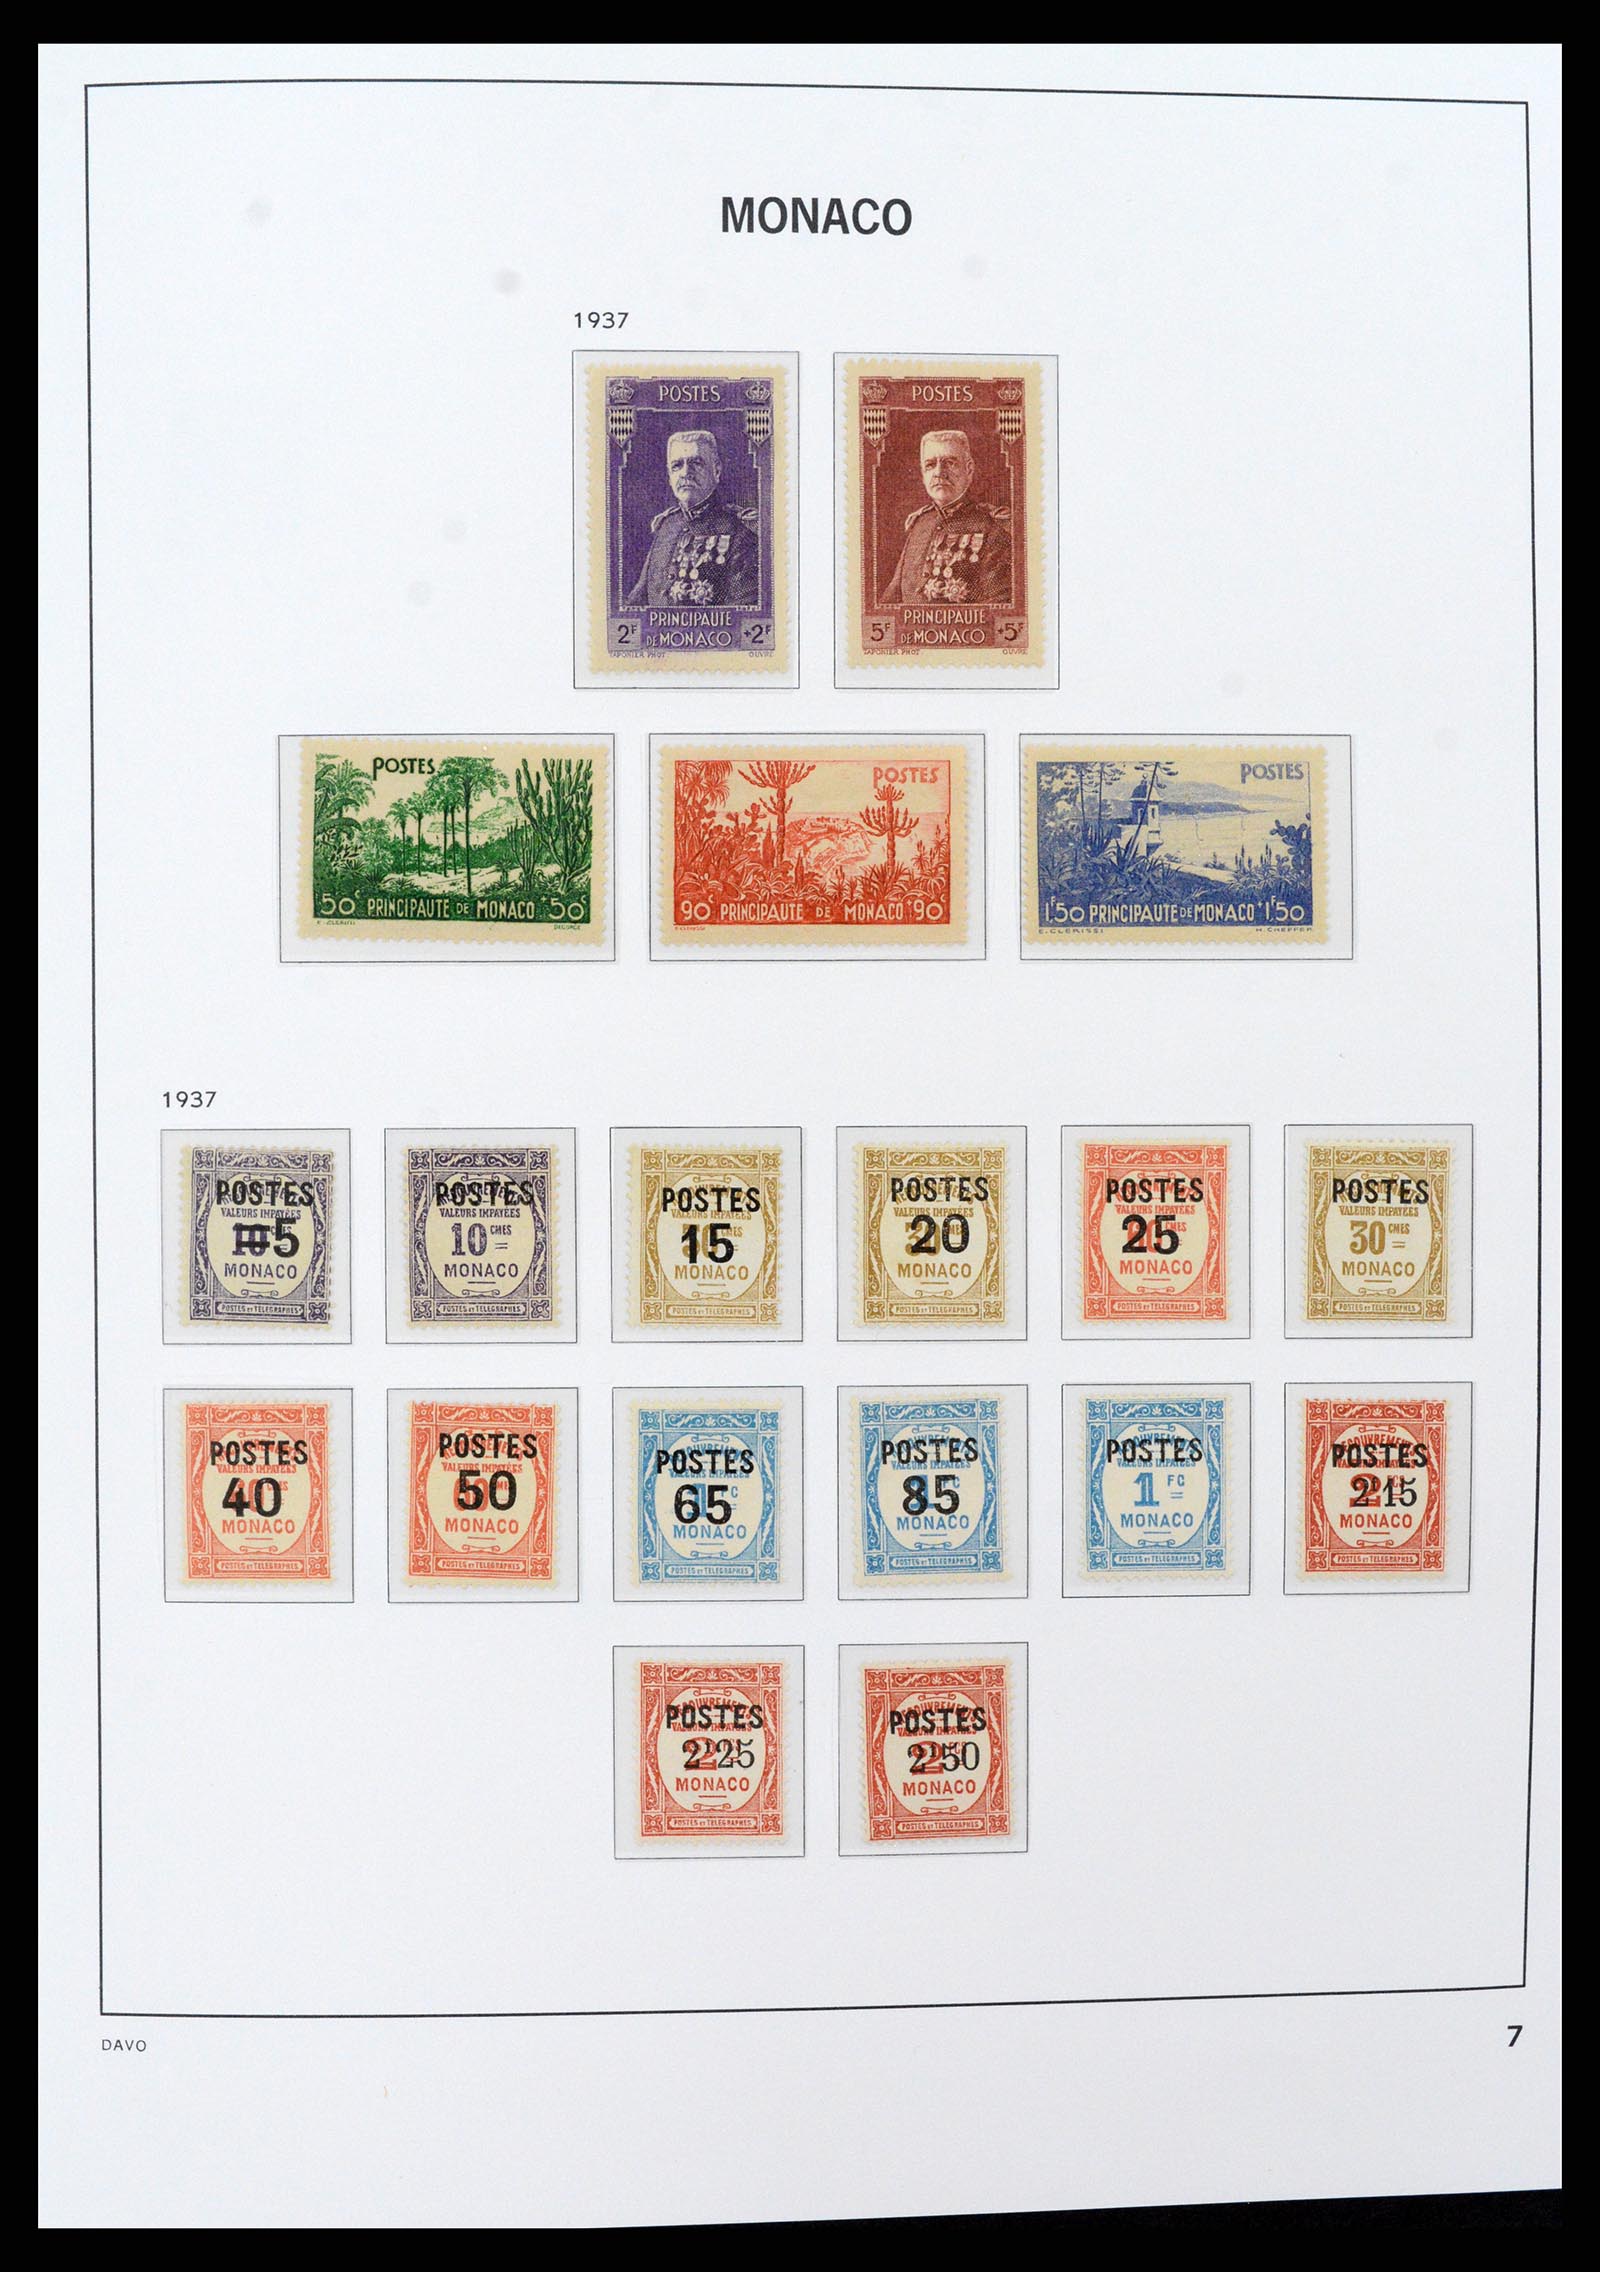 37279 007 - Stamp collection 37279 Monaco 1885-1969.